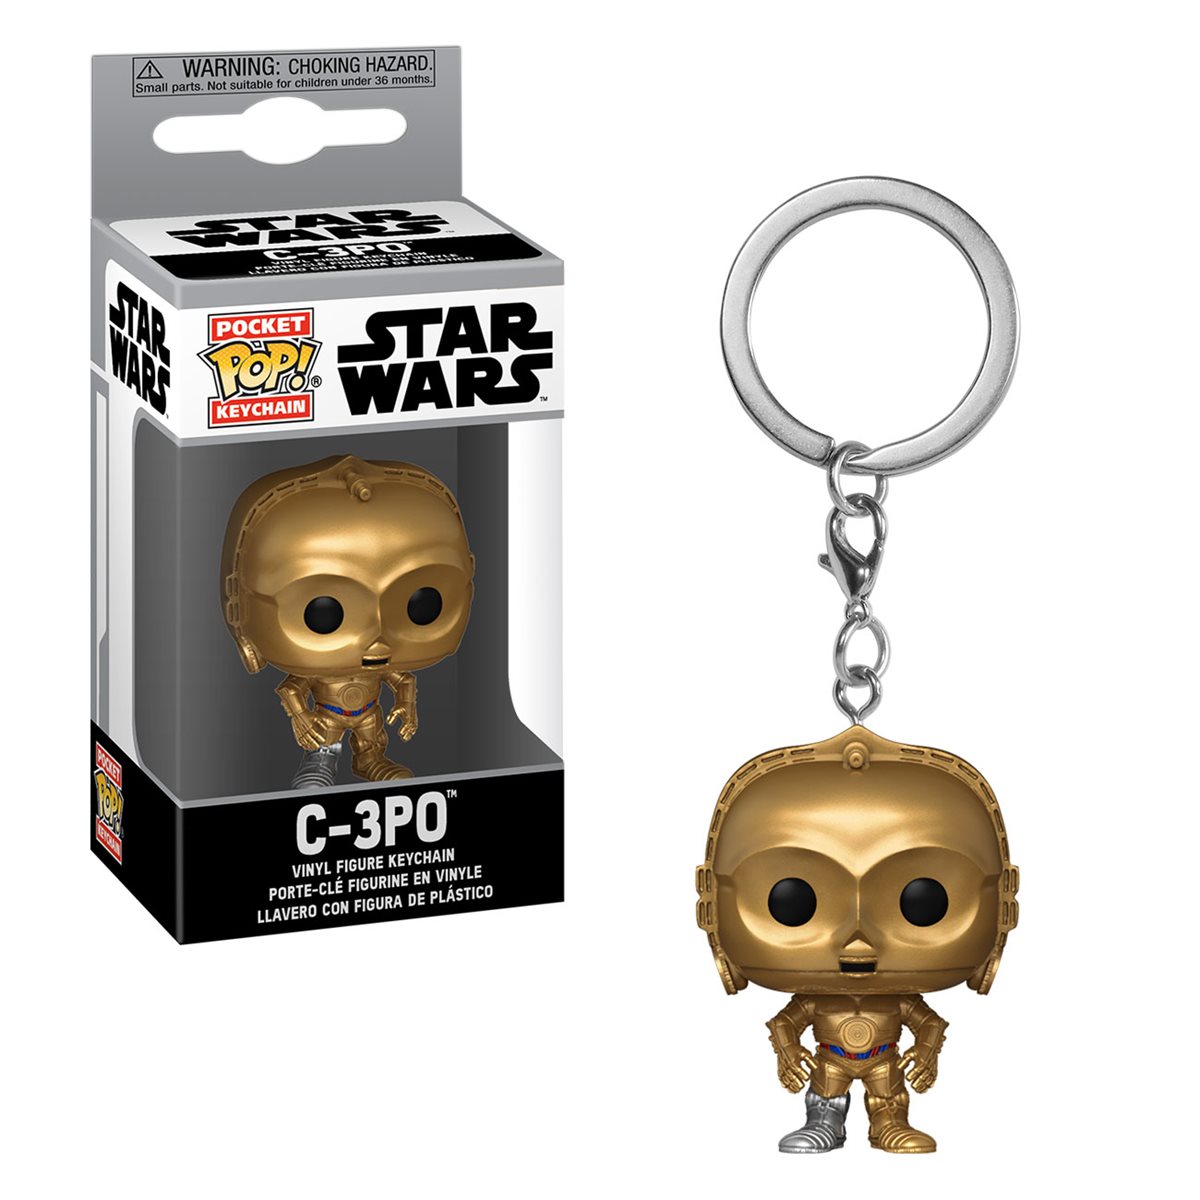 Wars C-3PO Pop! Key Chain